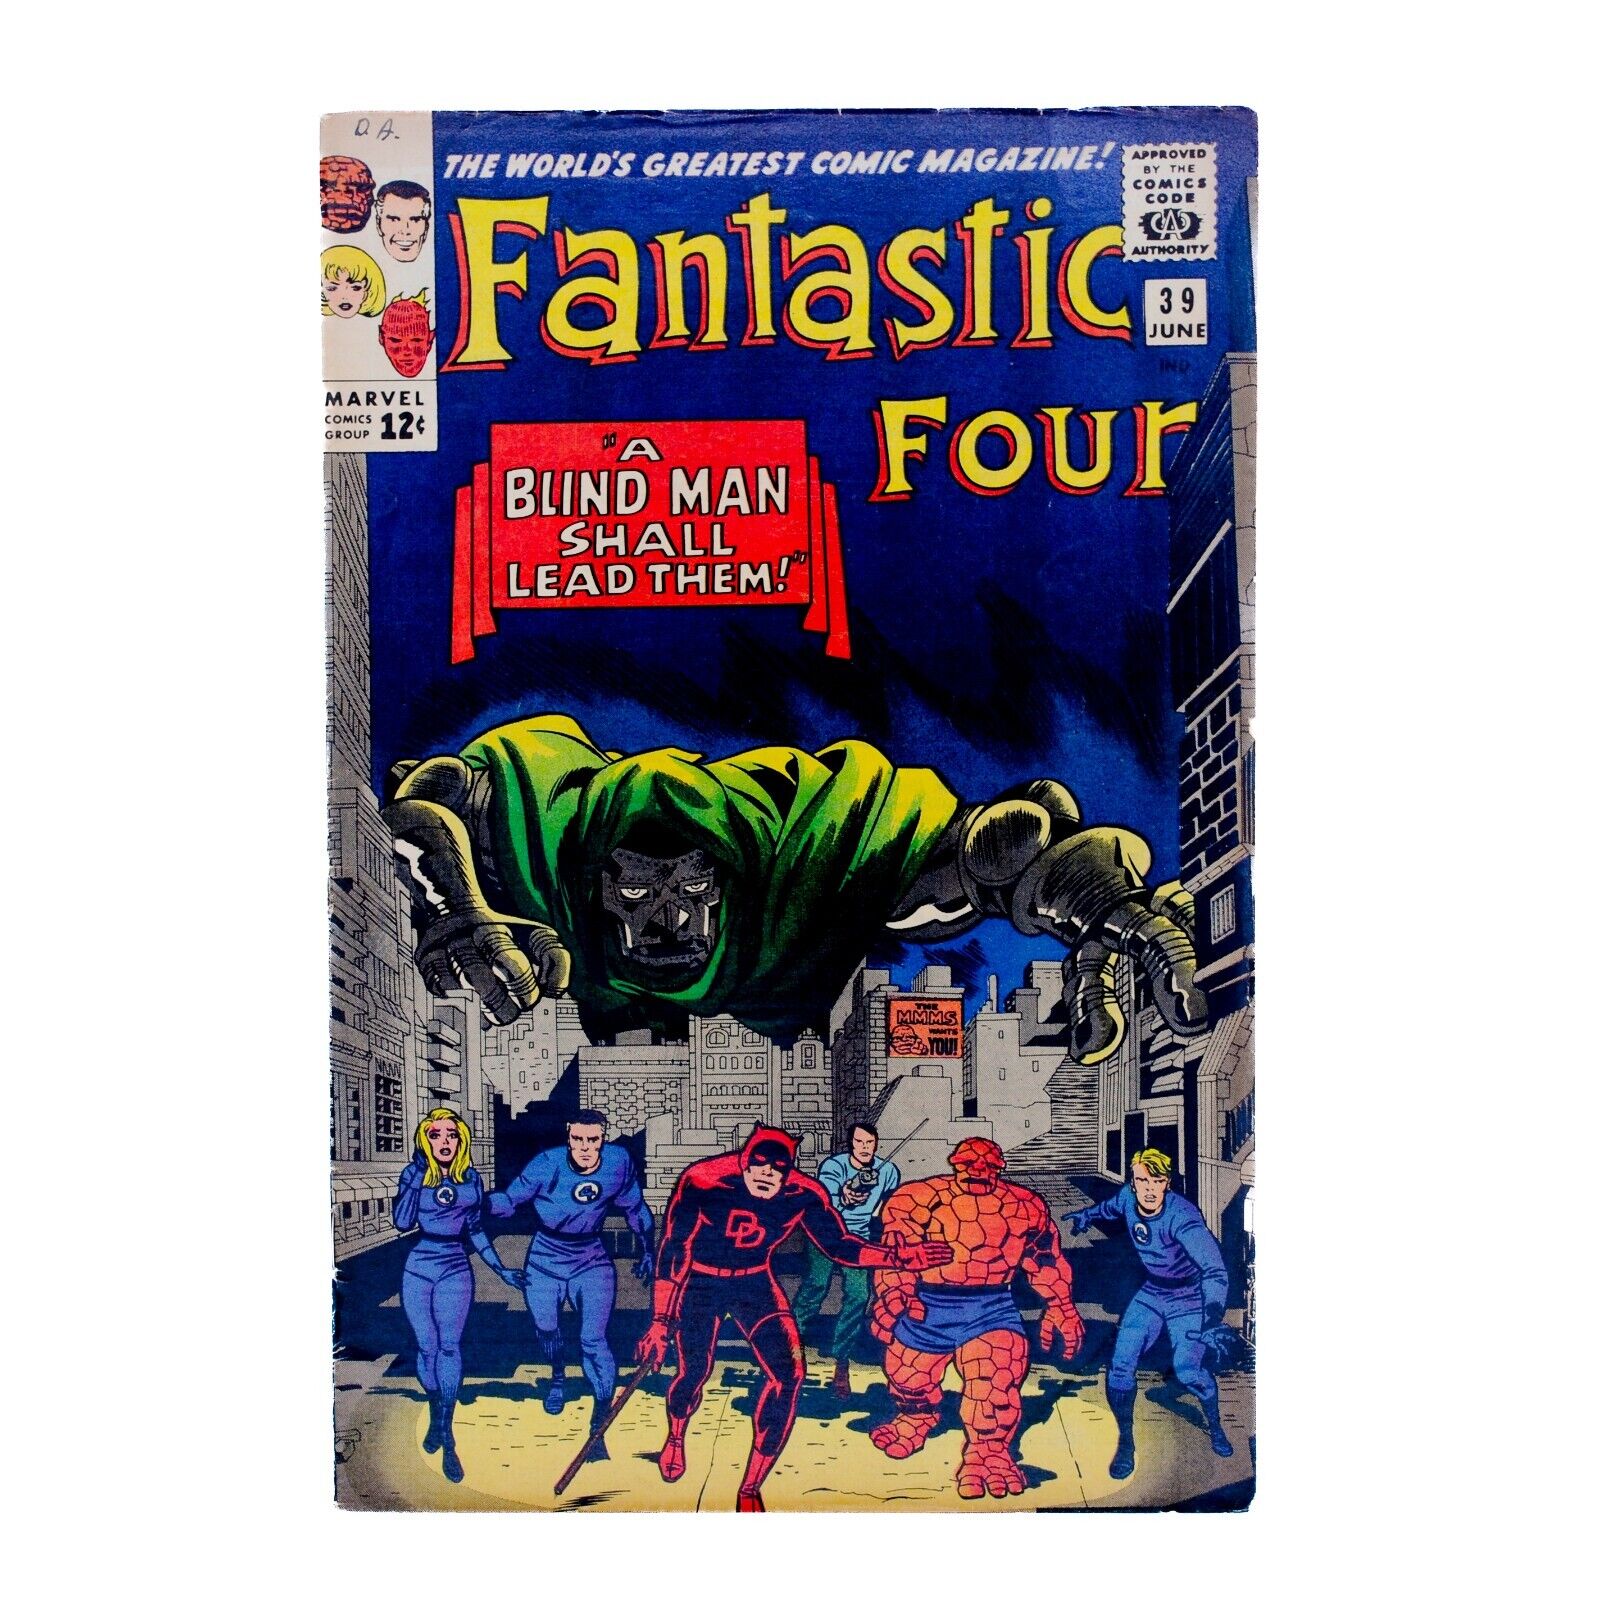 Fantastic Four Volume 1, Issue #39 (June 1965) Daredevil Crossover